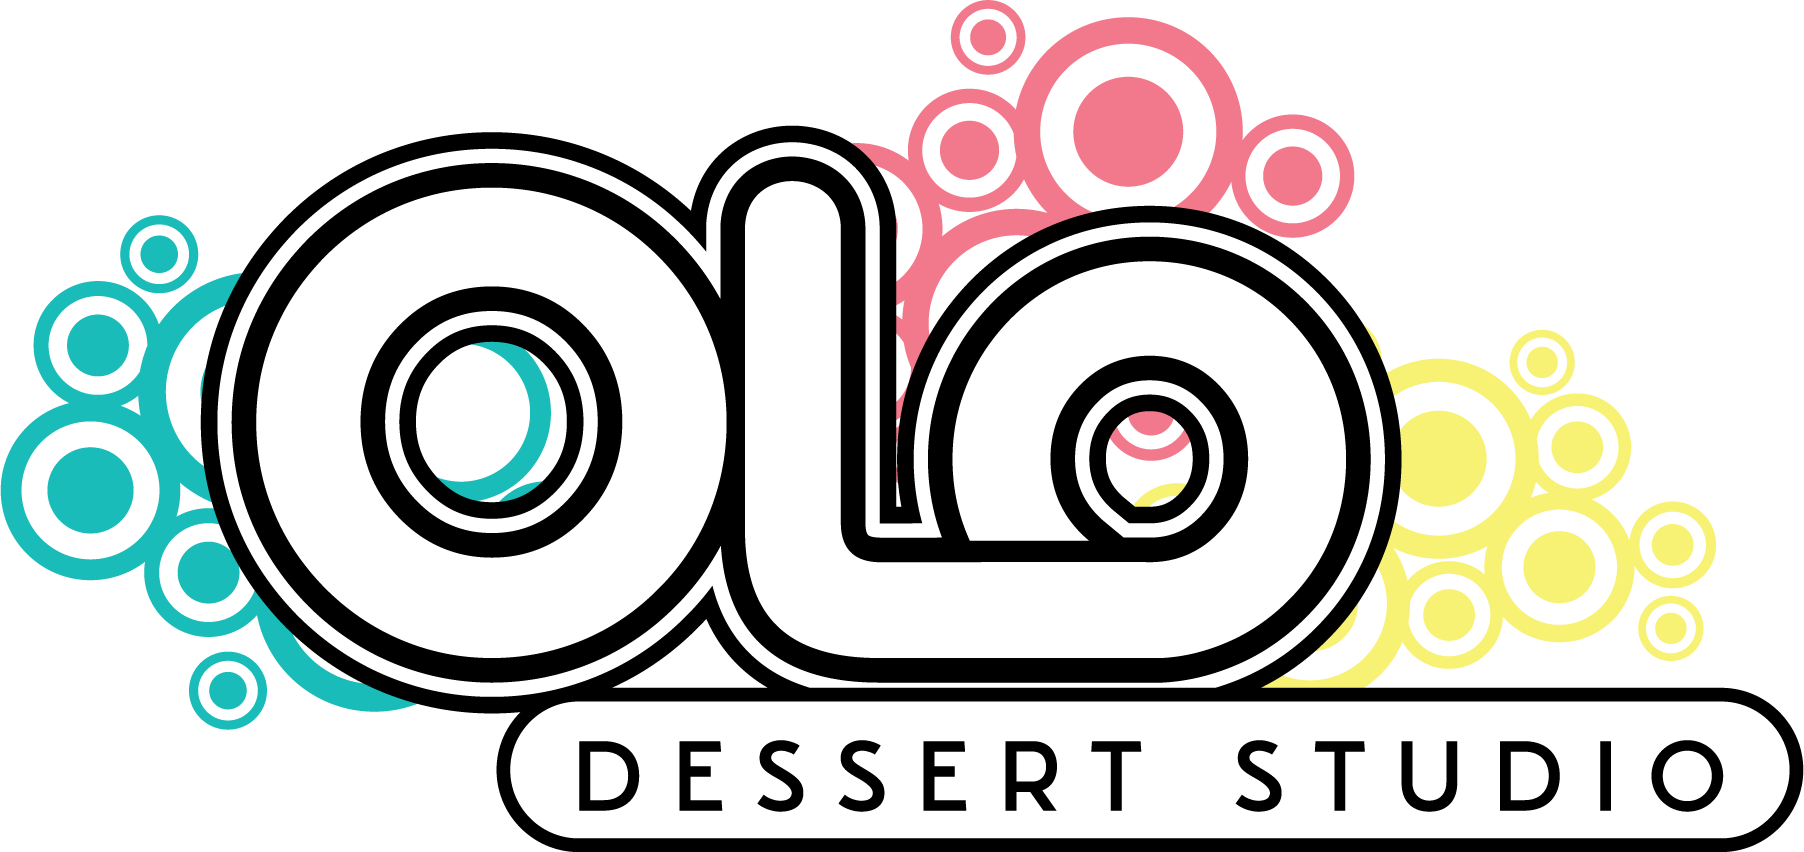 Olo Dessert Studio